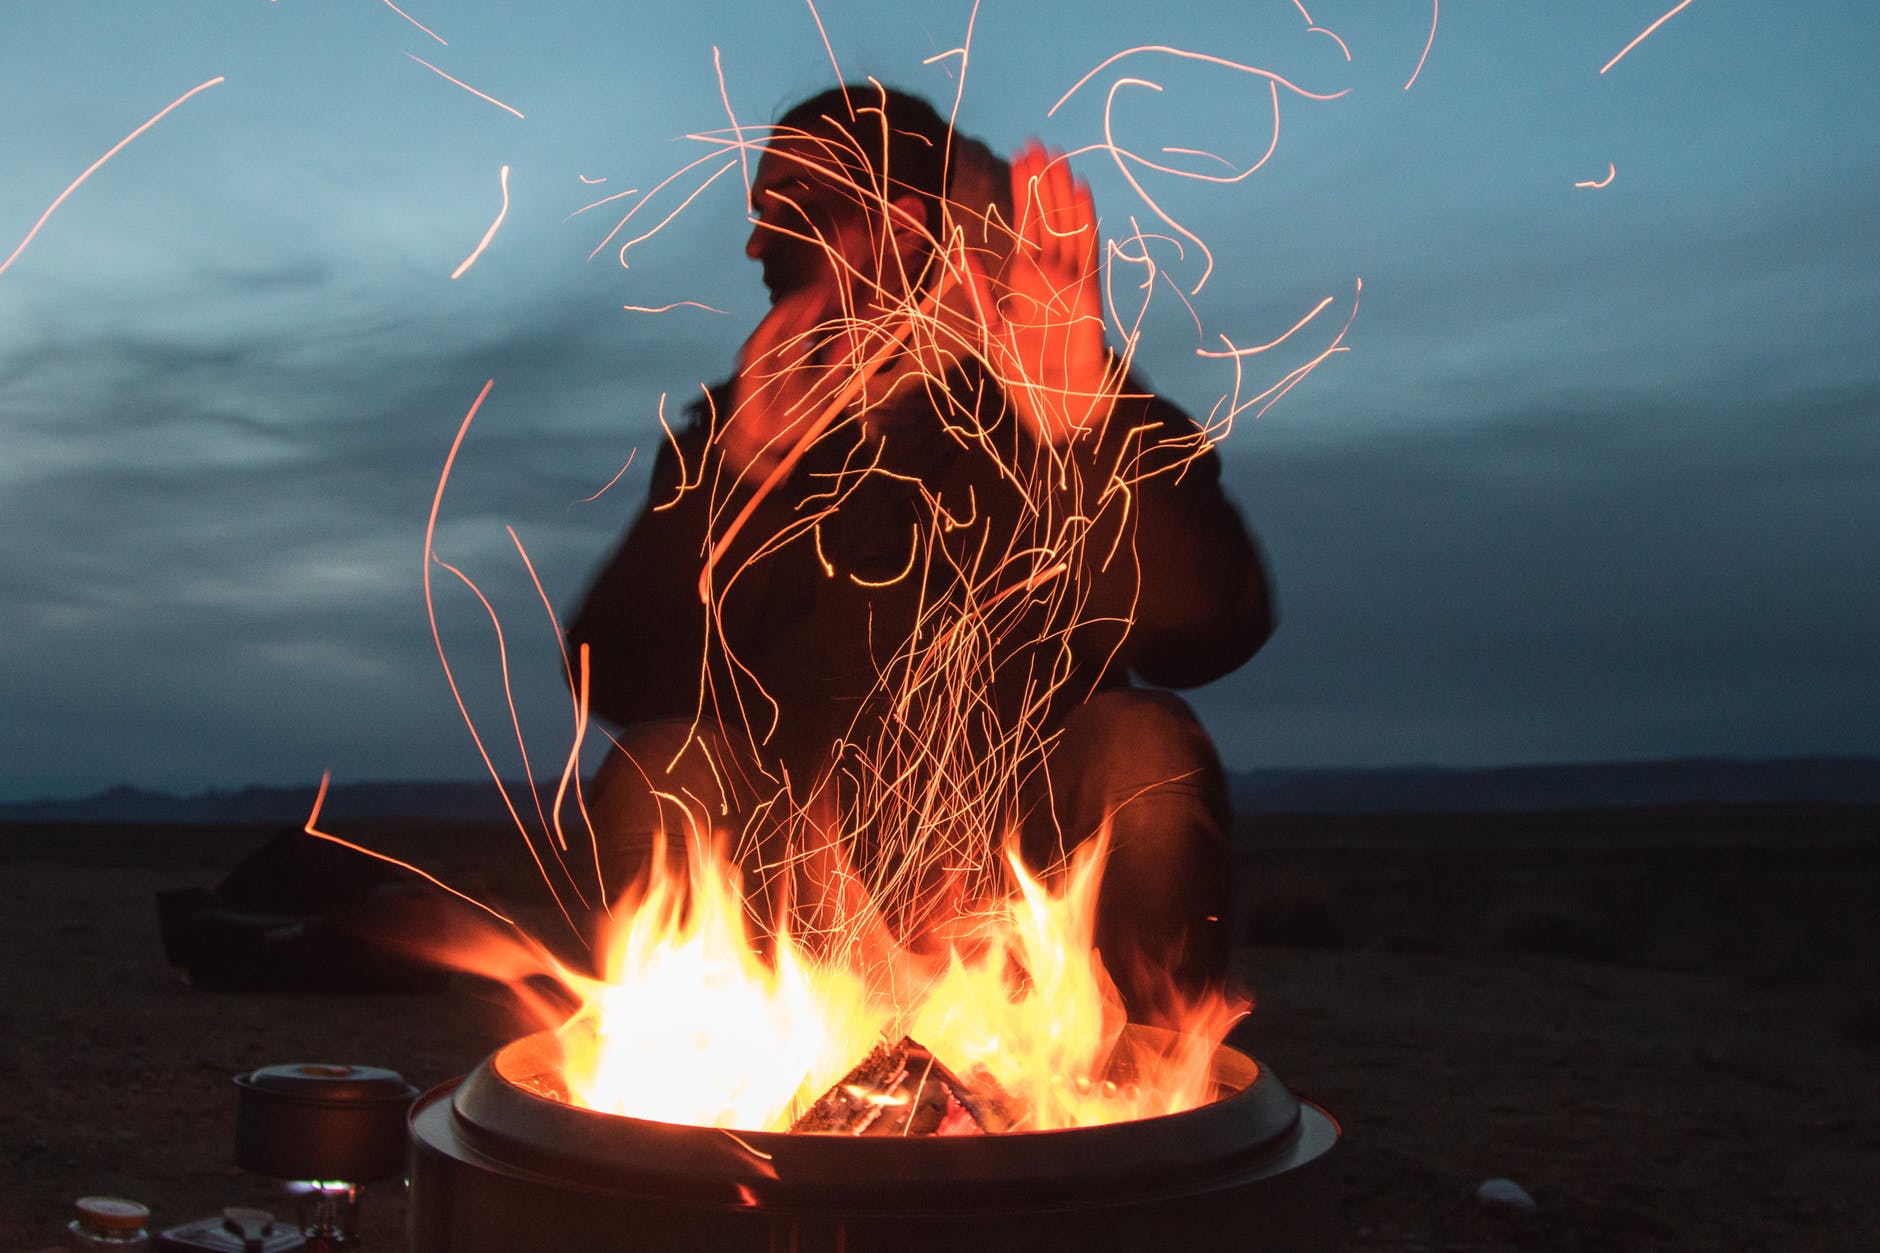 man sitting facing fire in pot during night